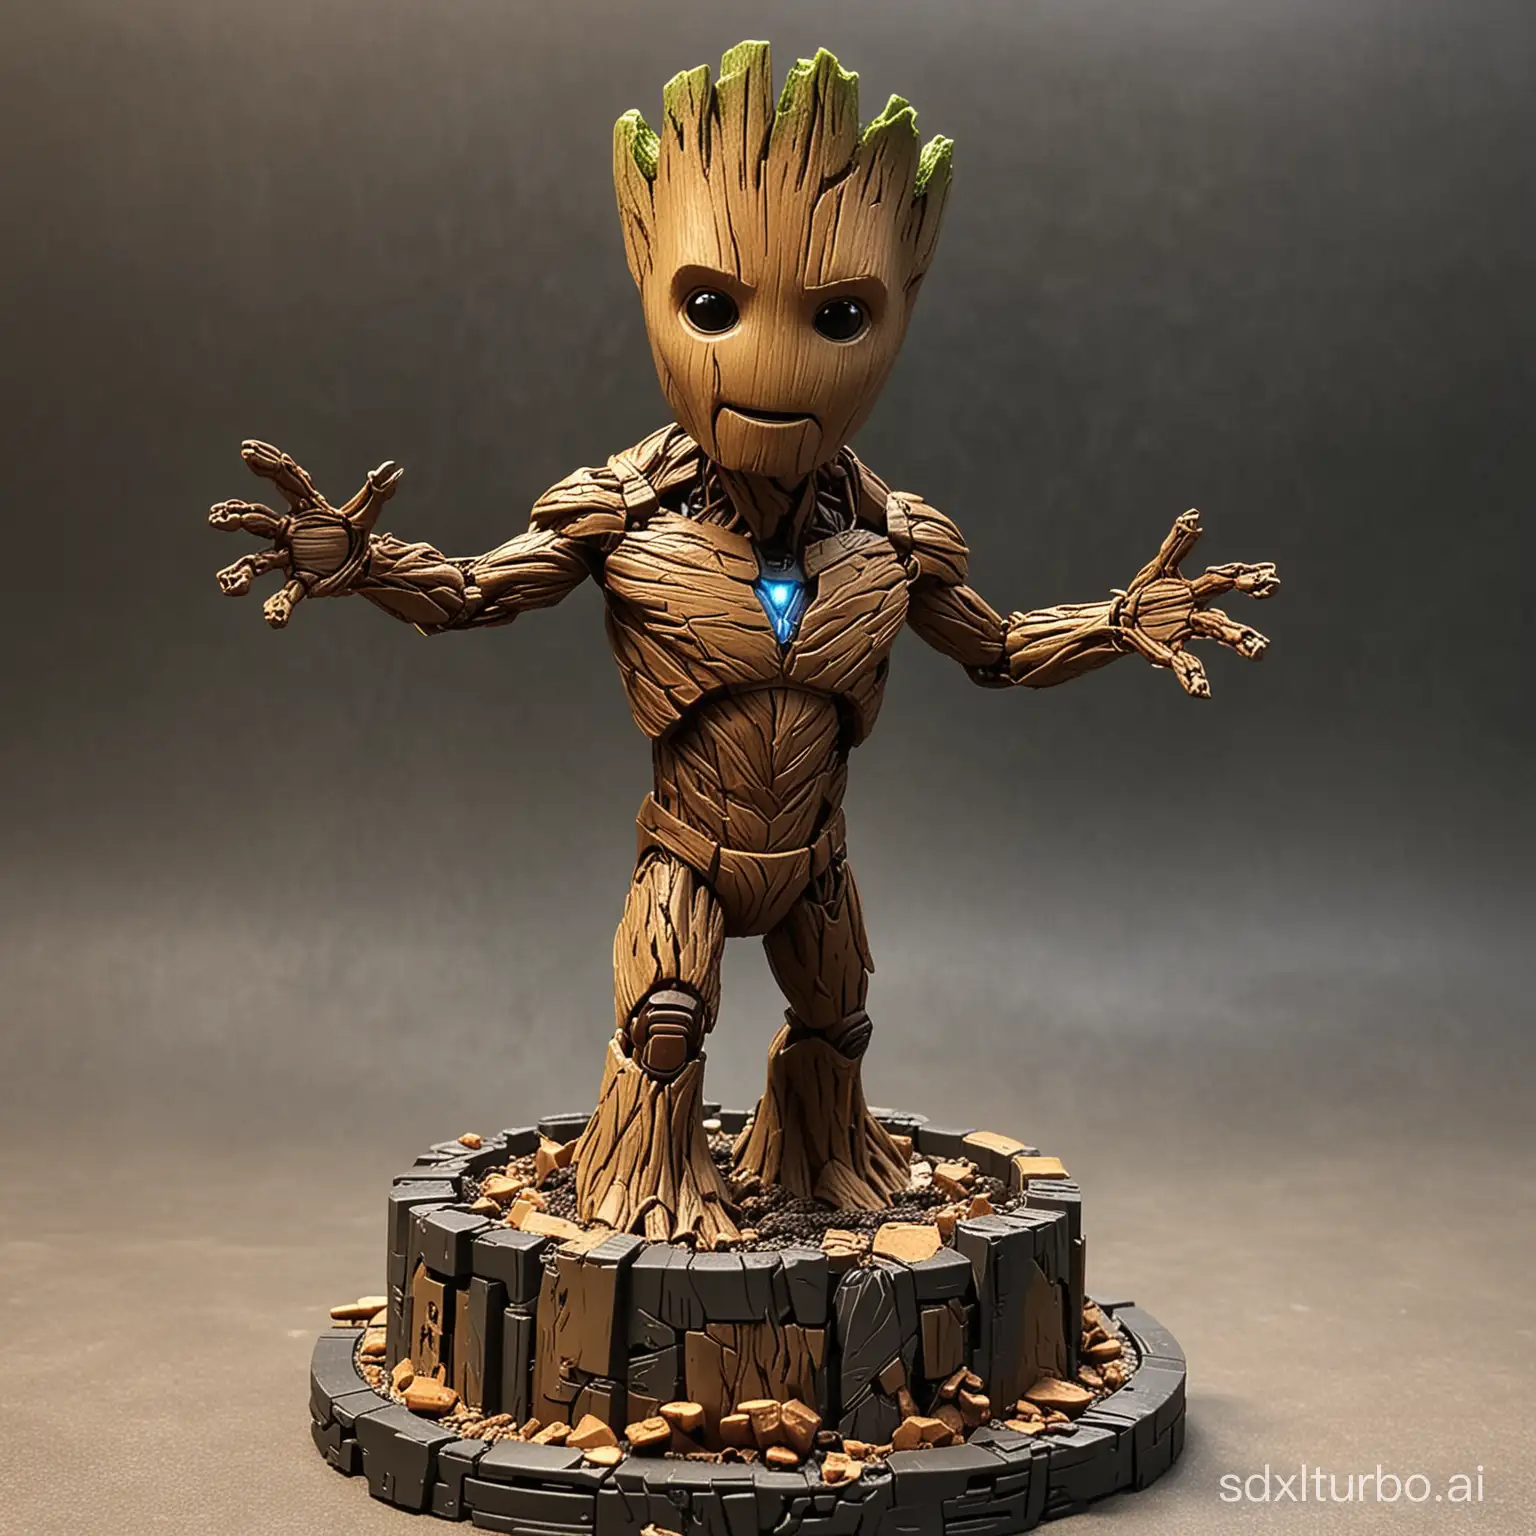 Groot turn into iron man